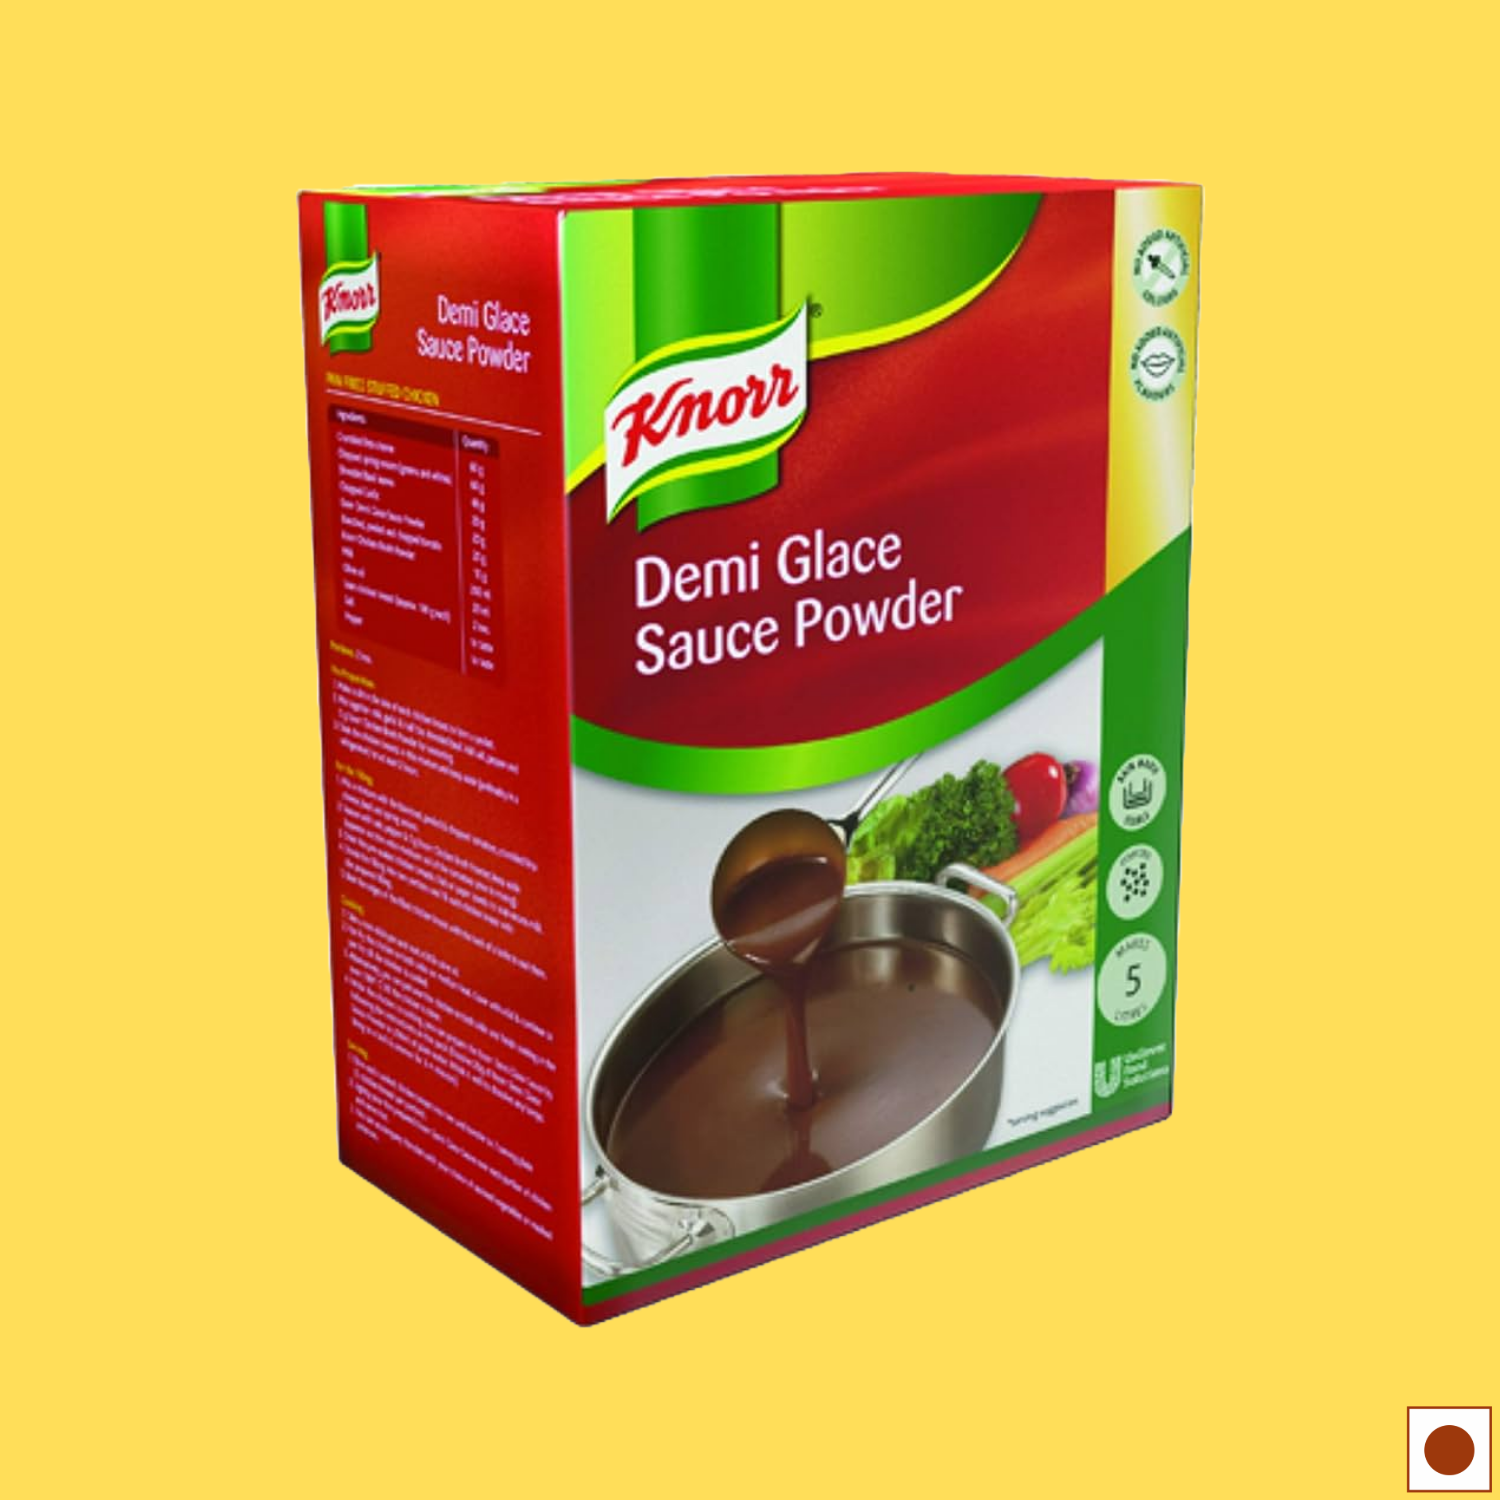 Knorr Demi Glace Sauce Powder, 500g